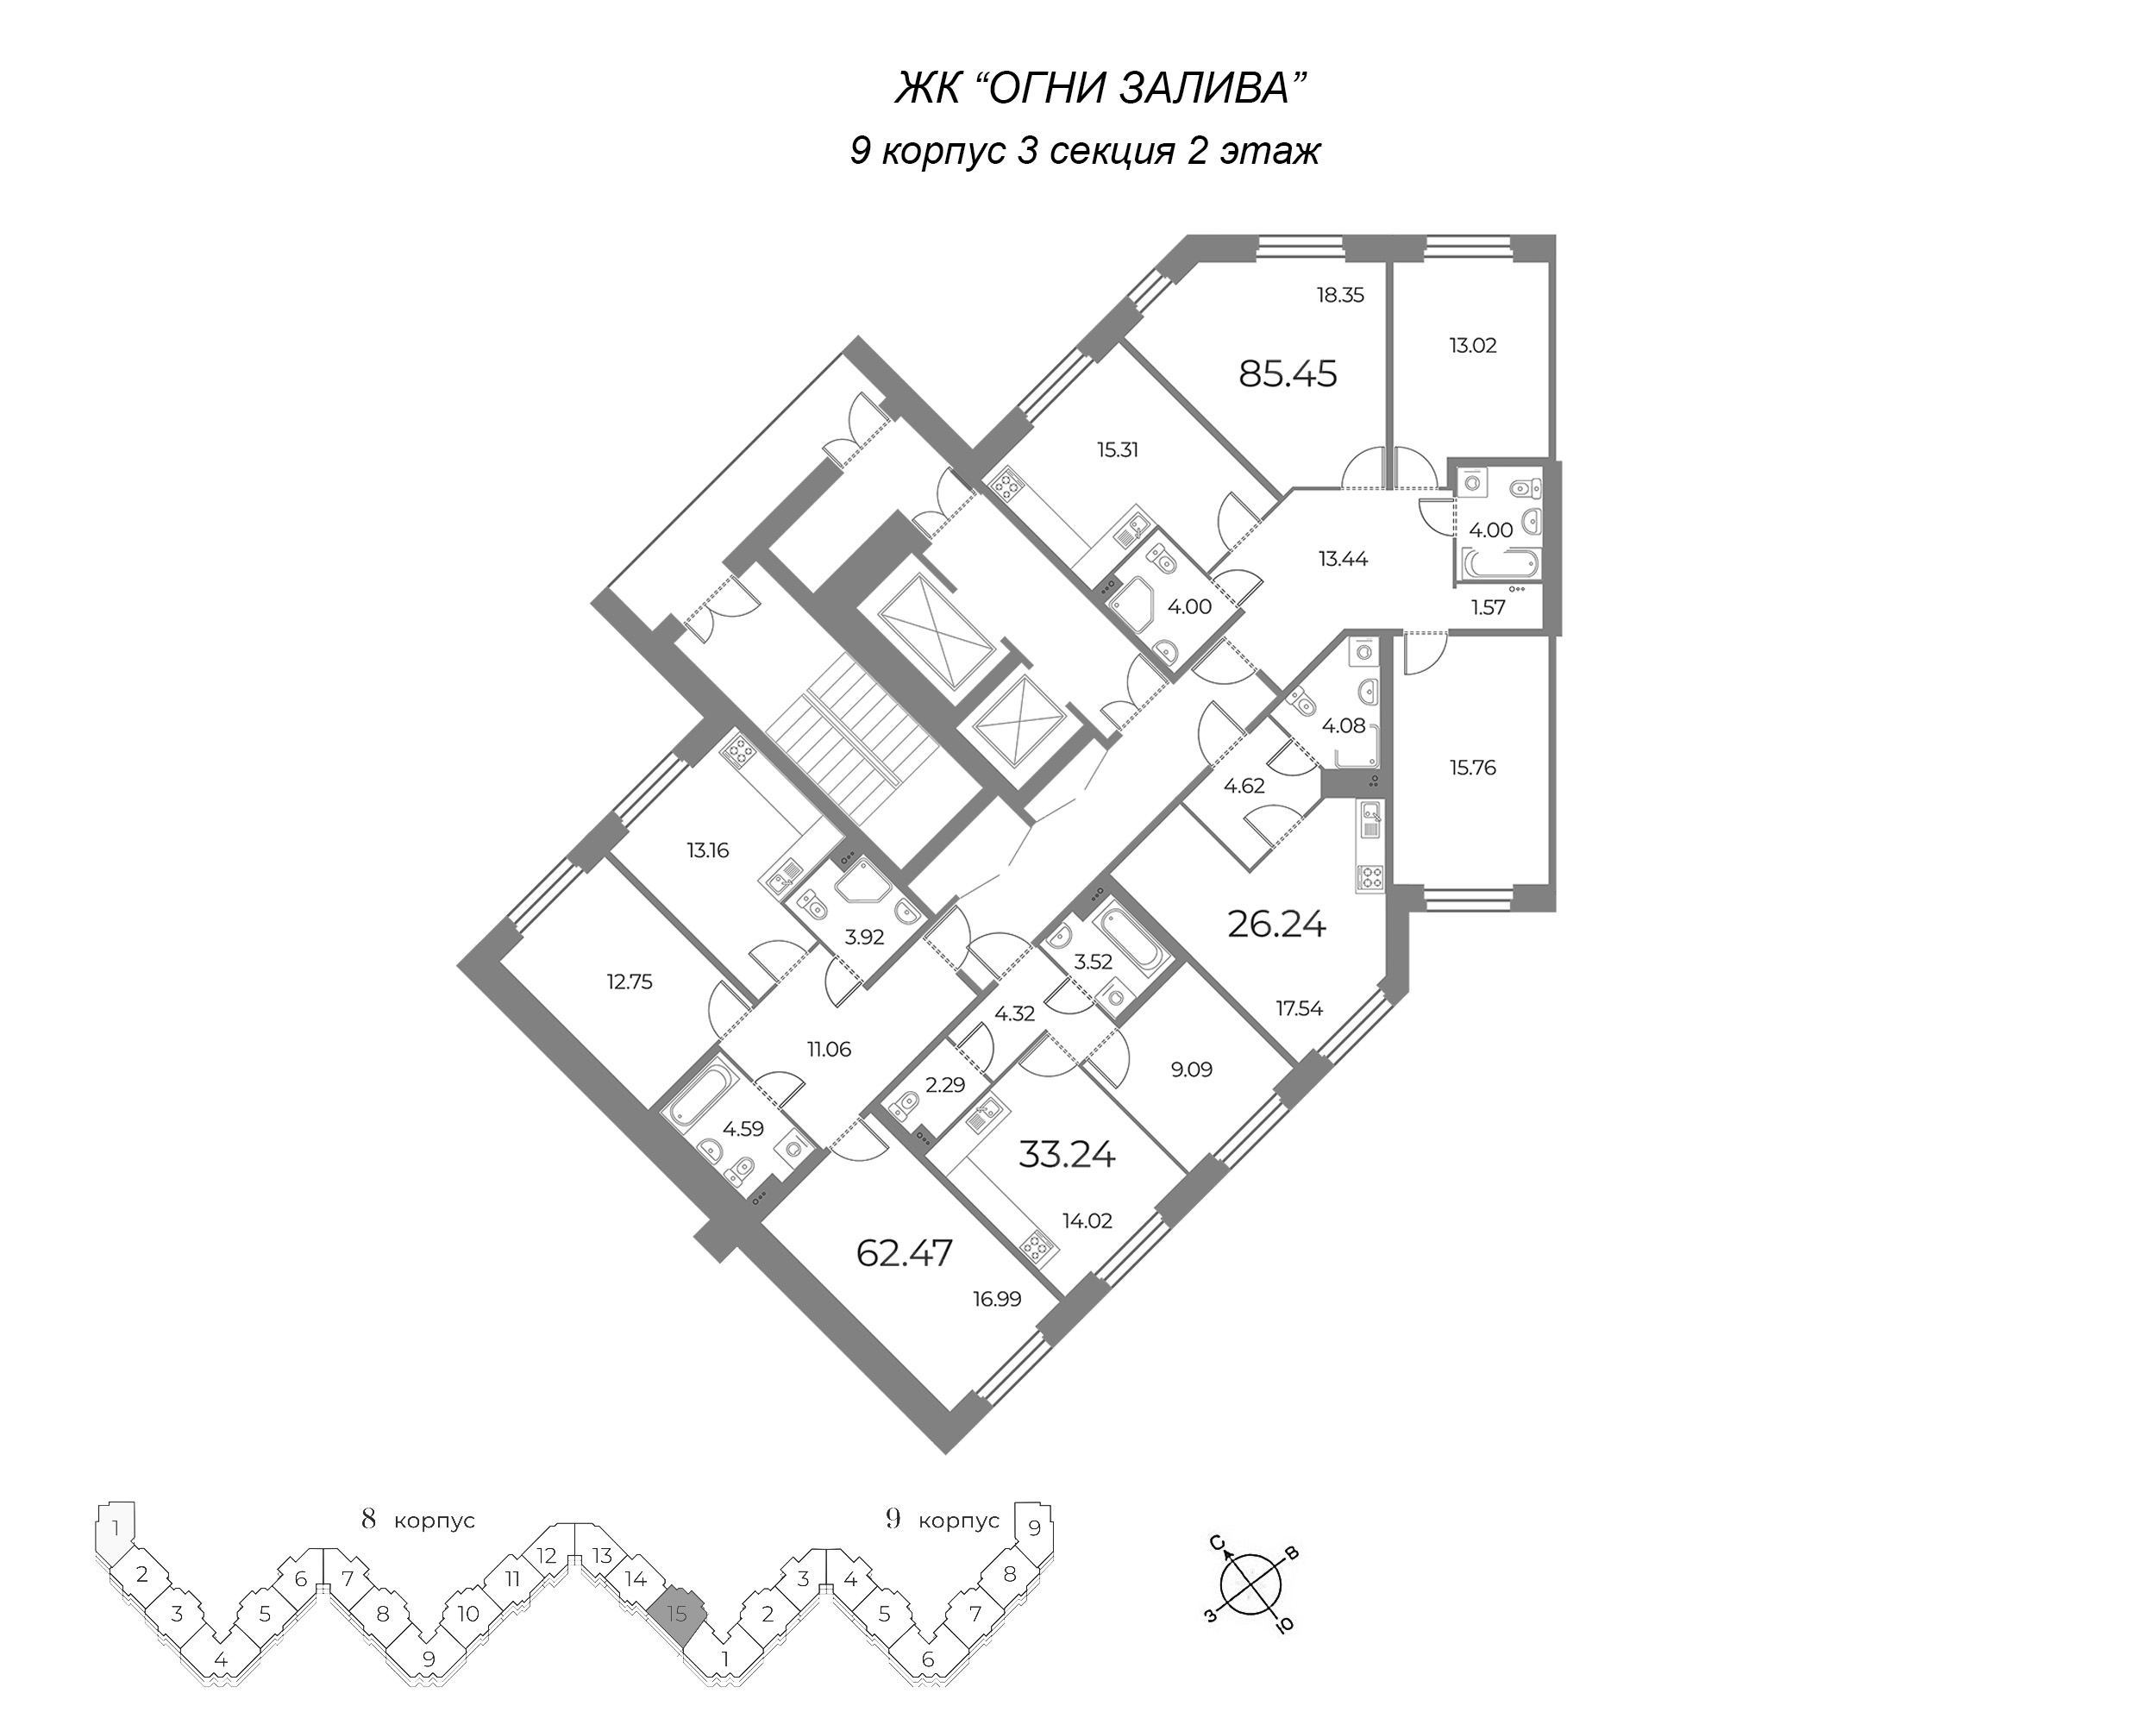 4-комнатная (Евро) квартира, 85.45 м² - планировка этажа